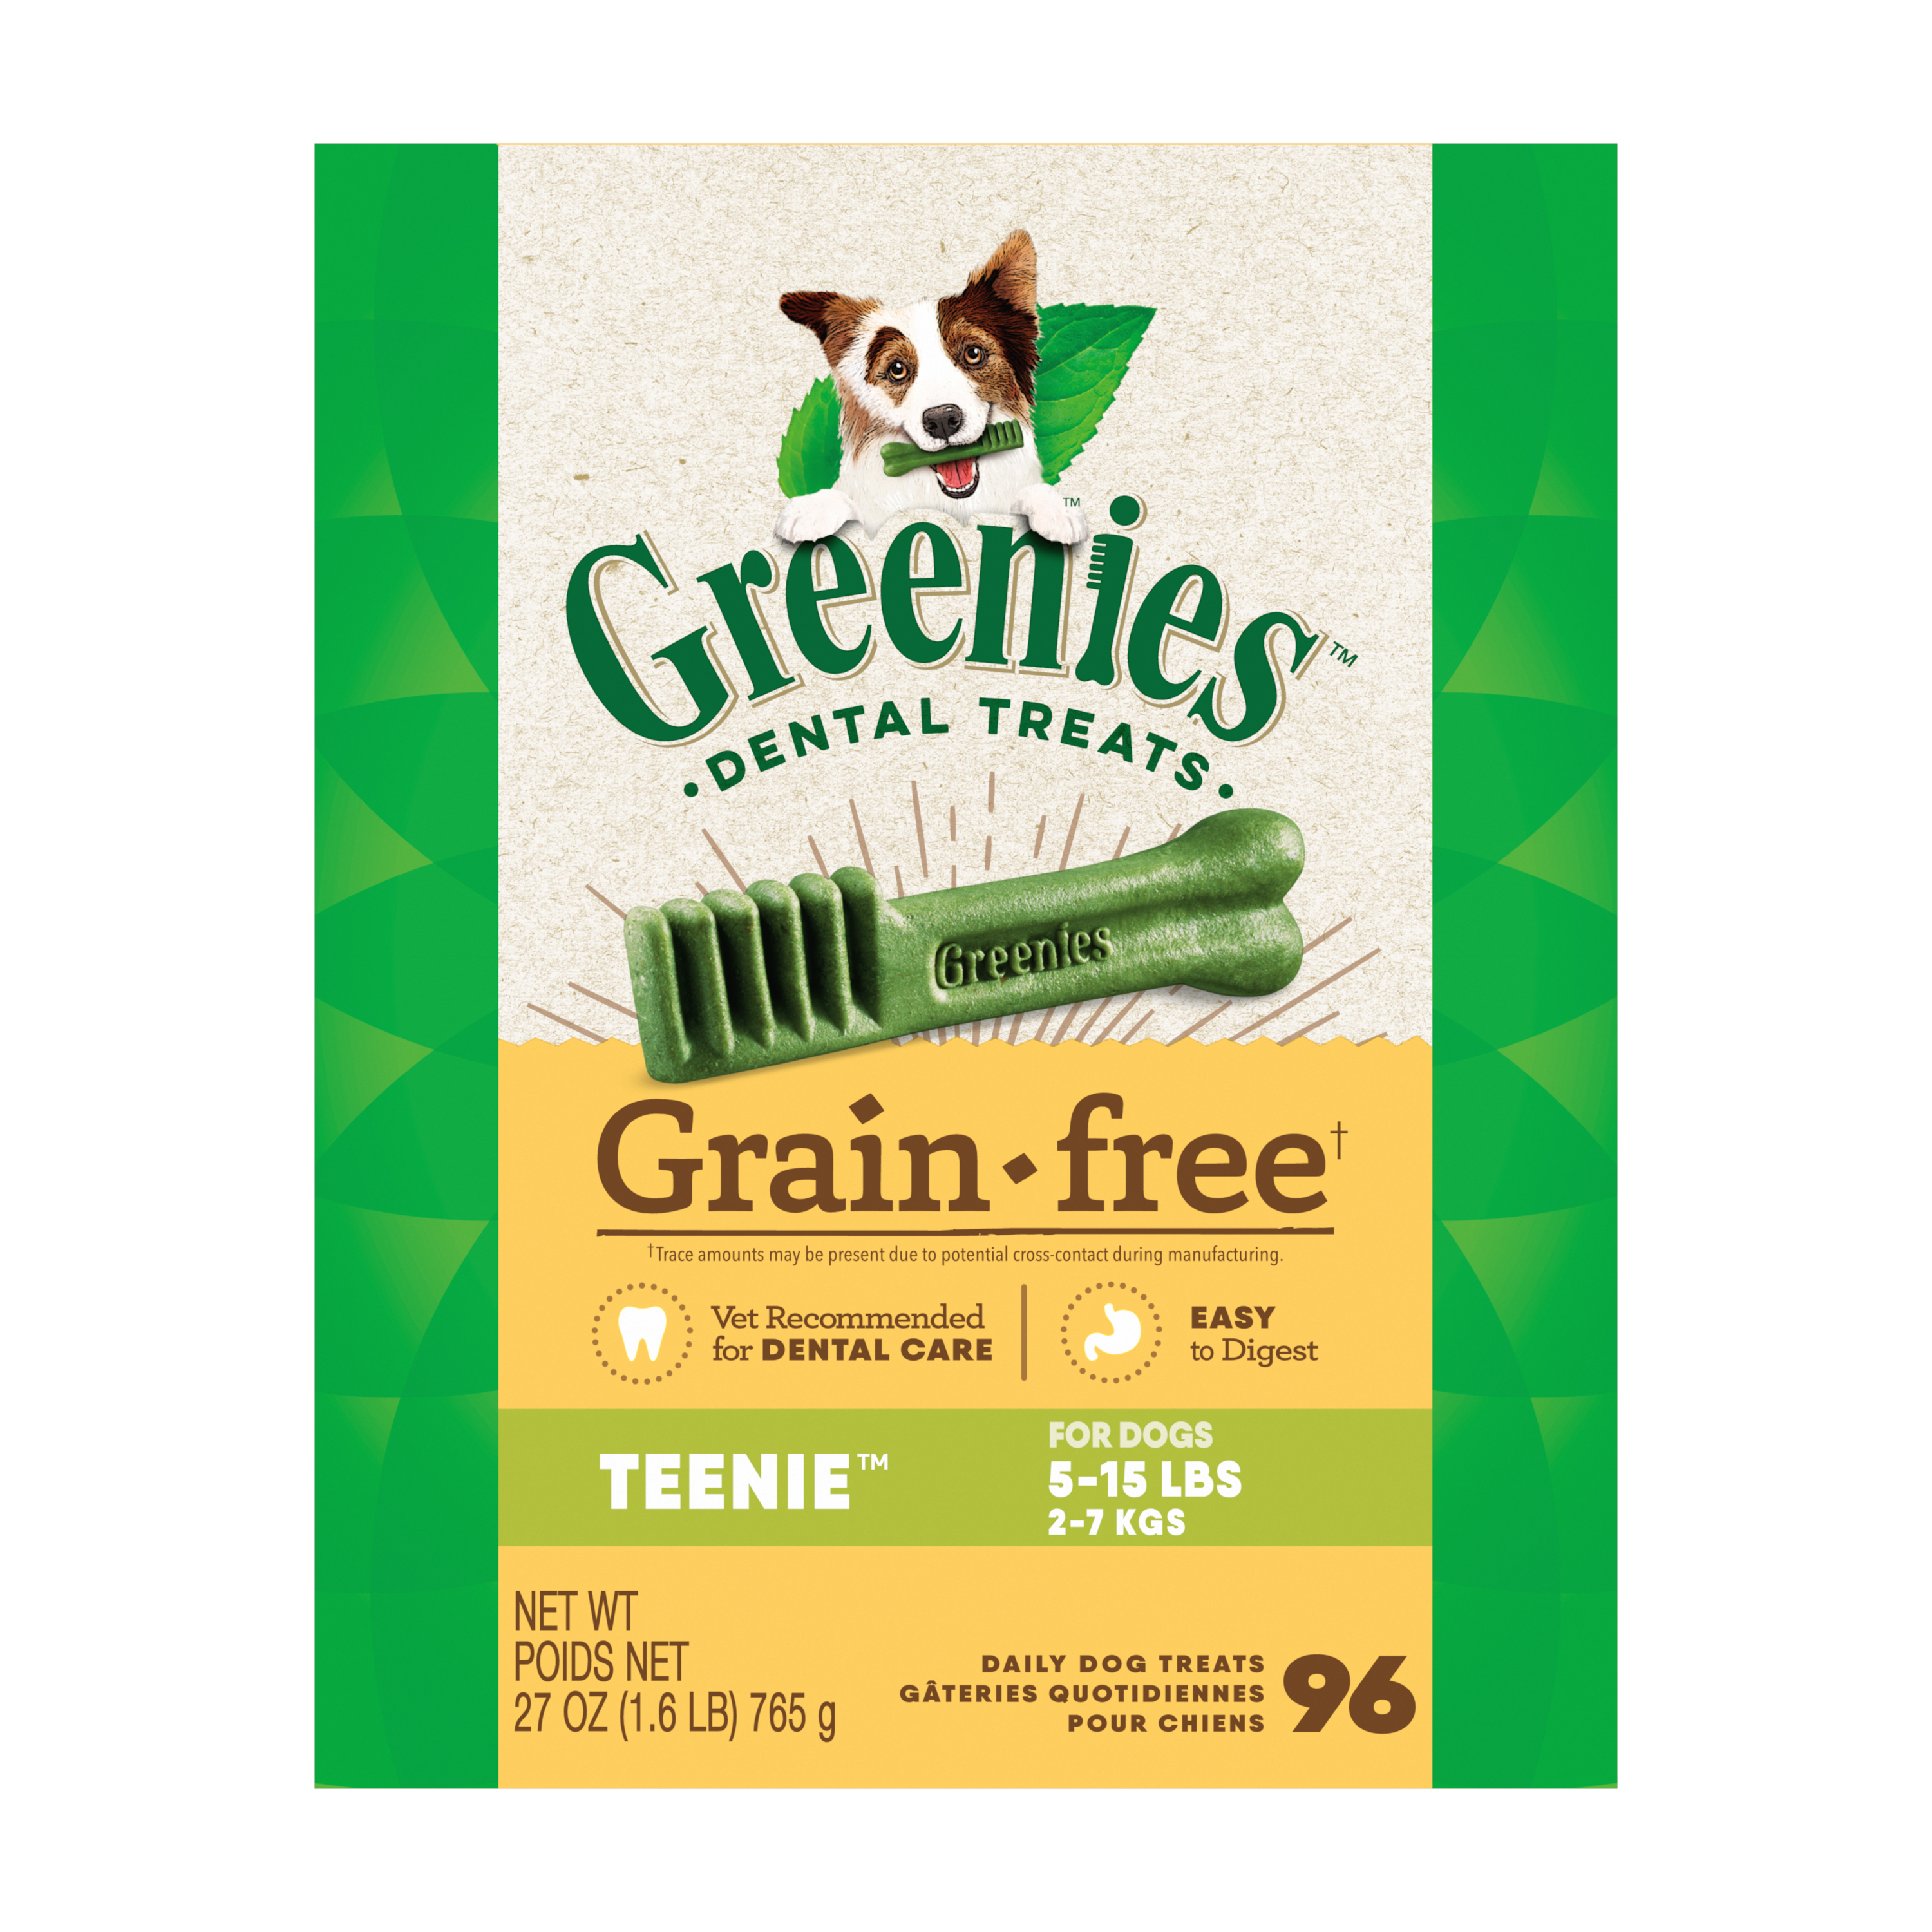 27 oz. Greenies Grain Free Teenie Tub Treat Pack - Health/First Aid